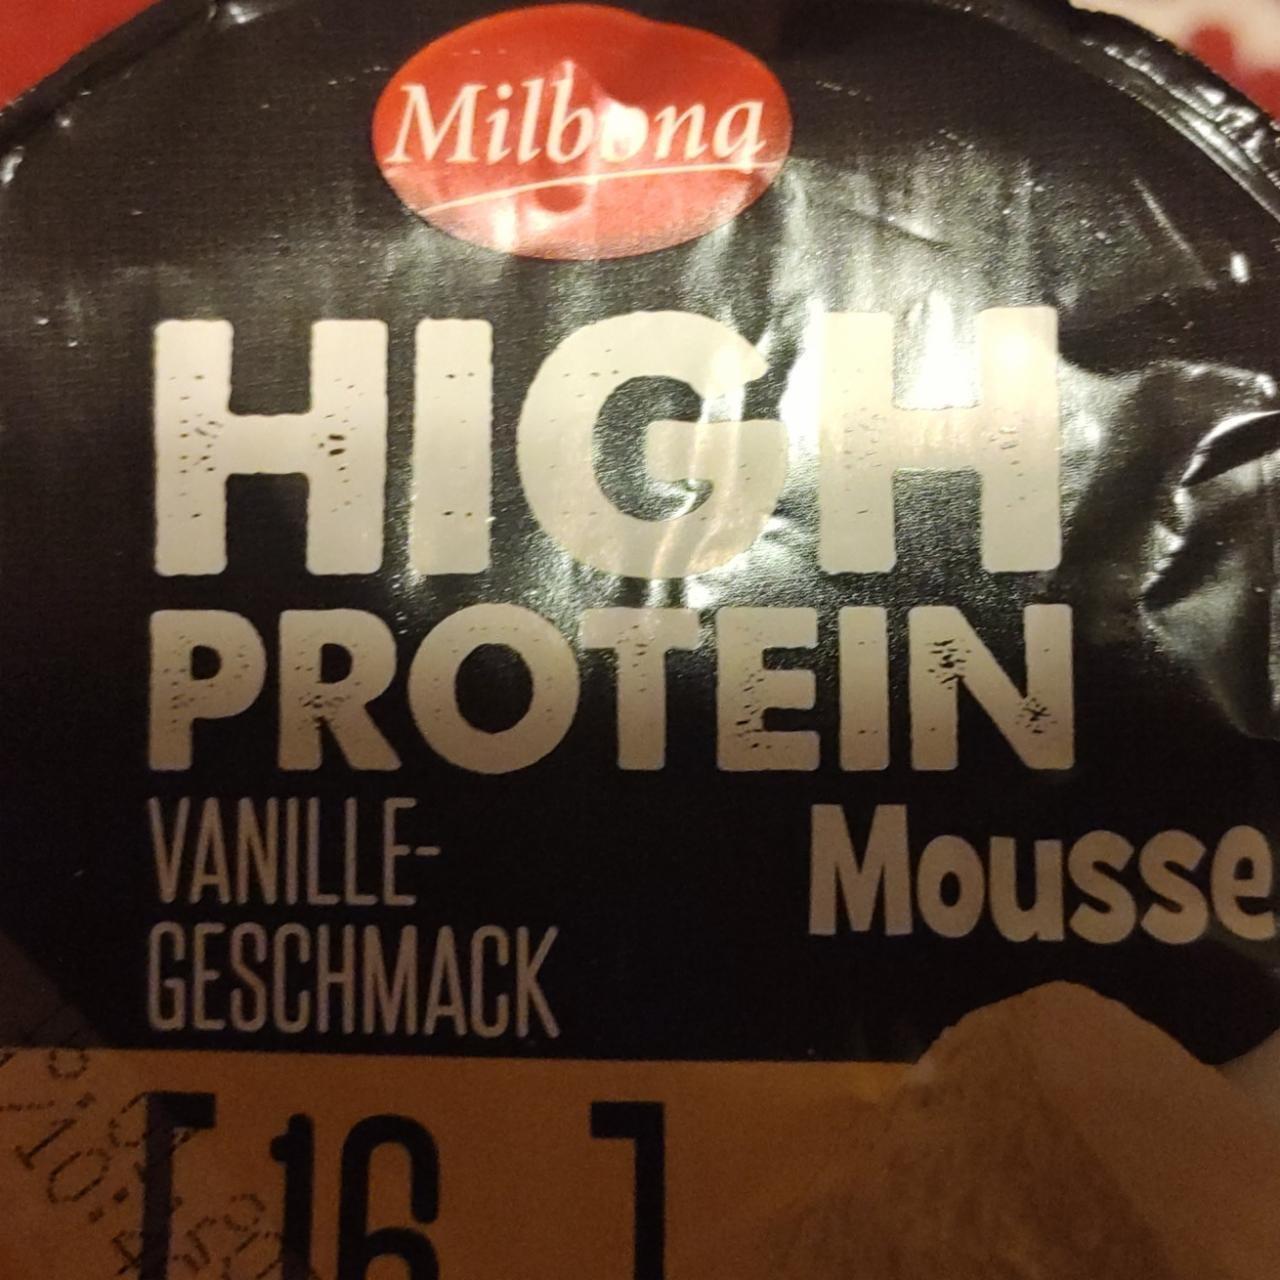 Képek - High protein Mousse Vanille Milbona